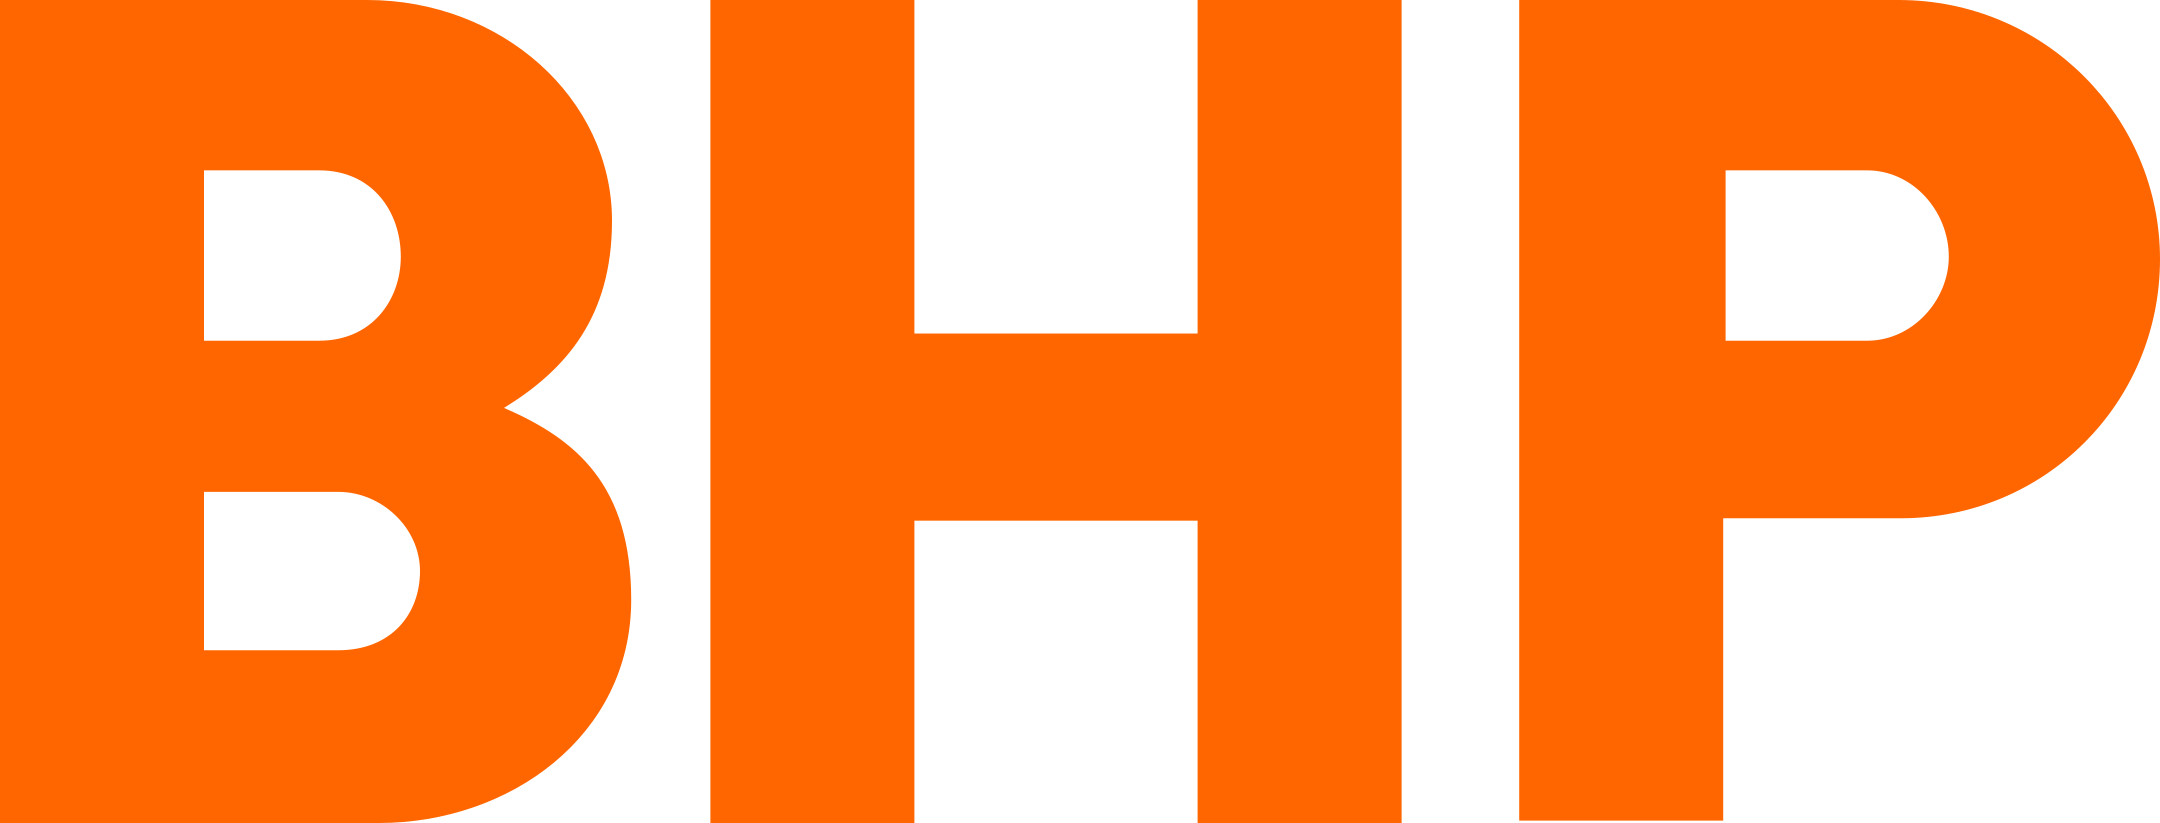 bhp logo 1 - BHP Logo